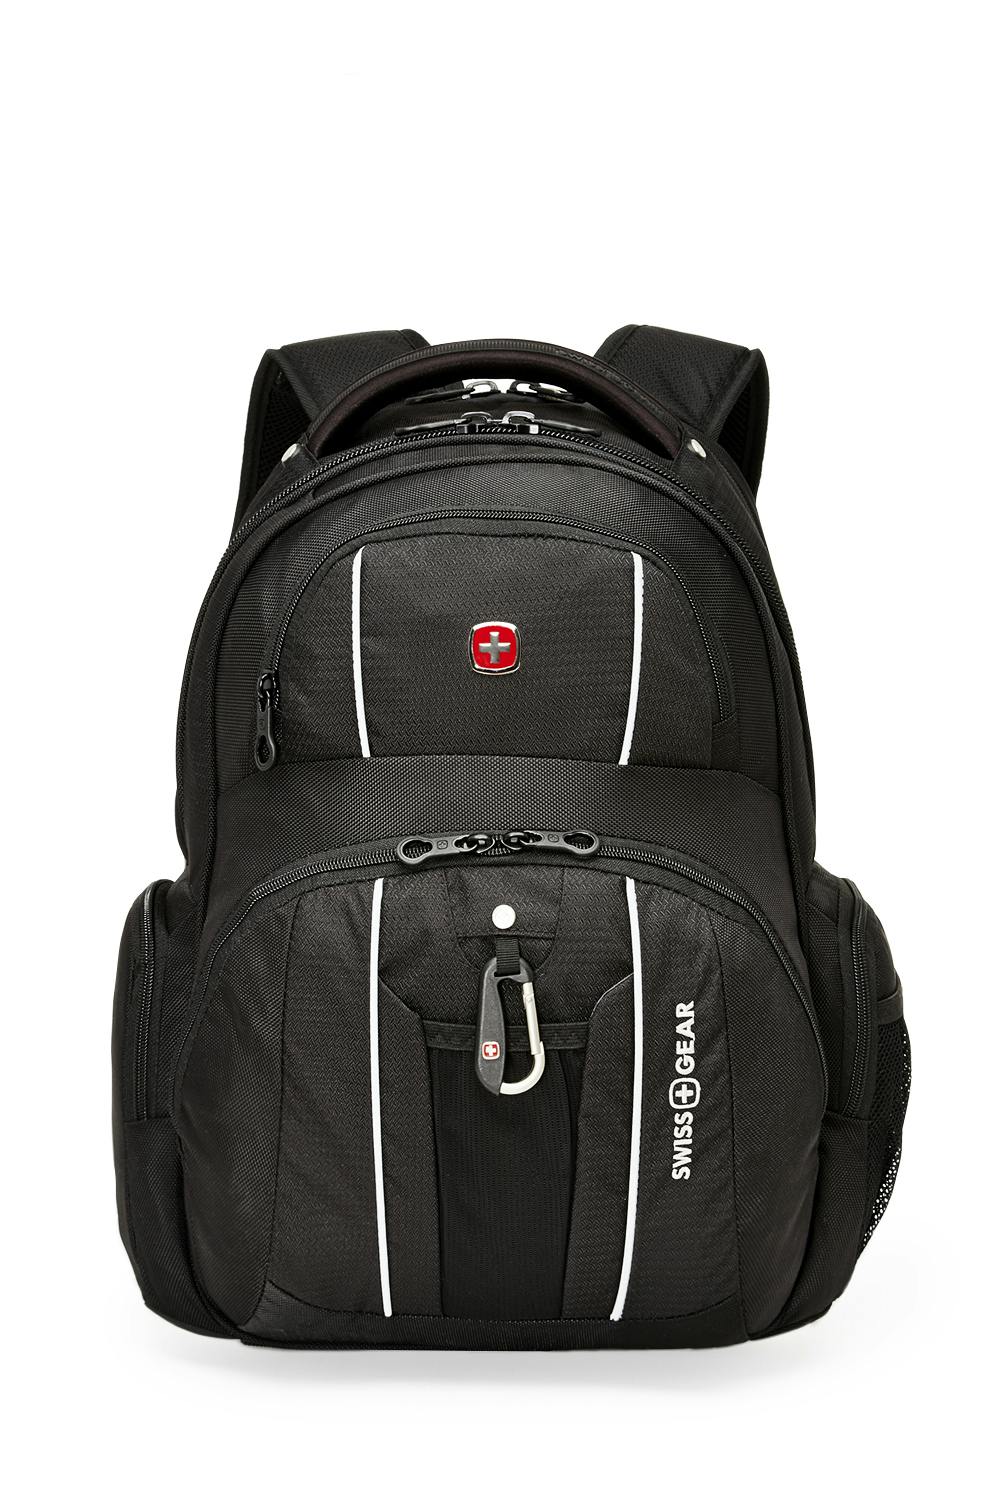 SWISSGEAR CANADA  Backpacks & Bags for Business, Laptop backpacks, Travel  backpacks, School backpacks & College backpacks.